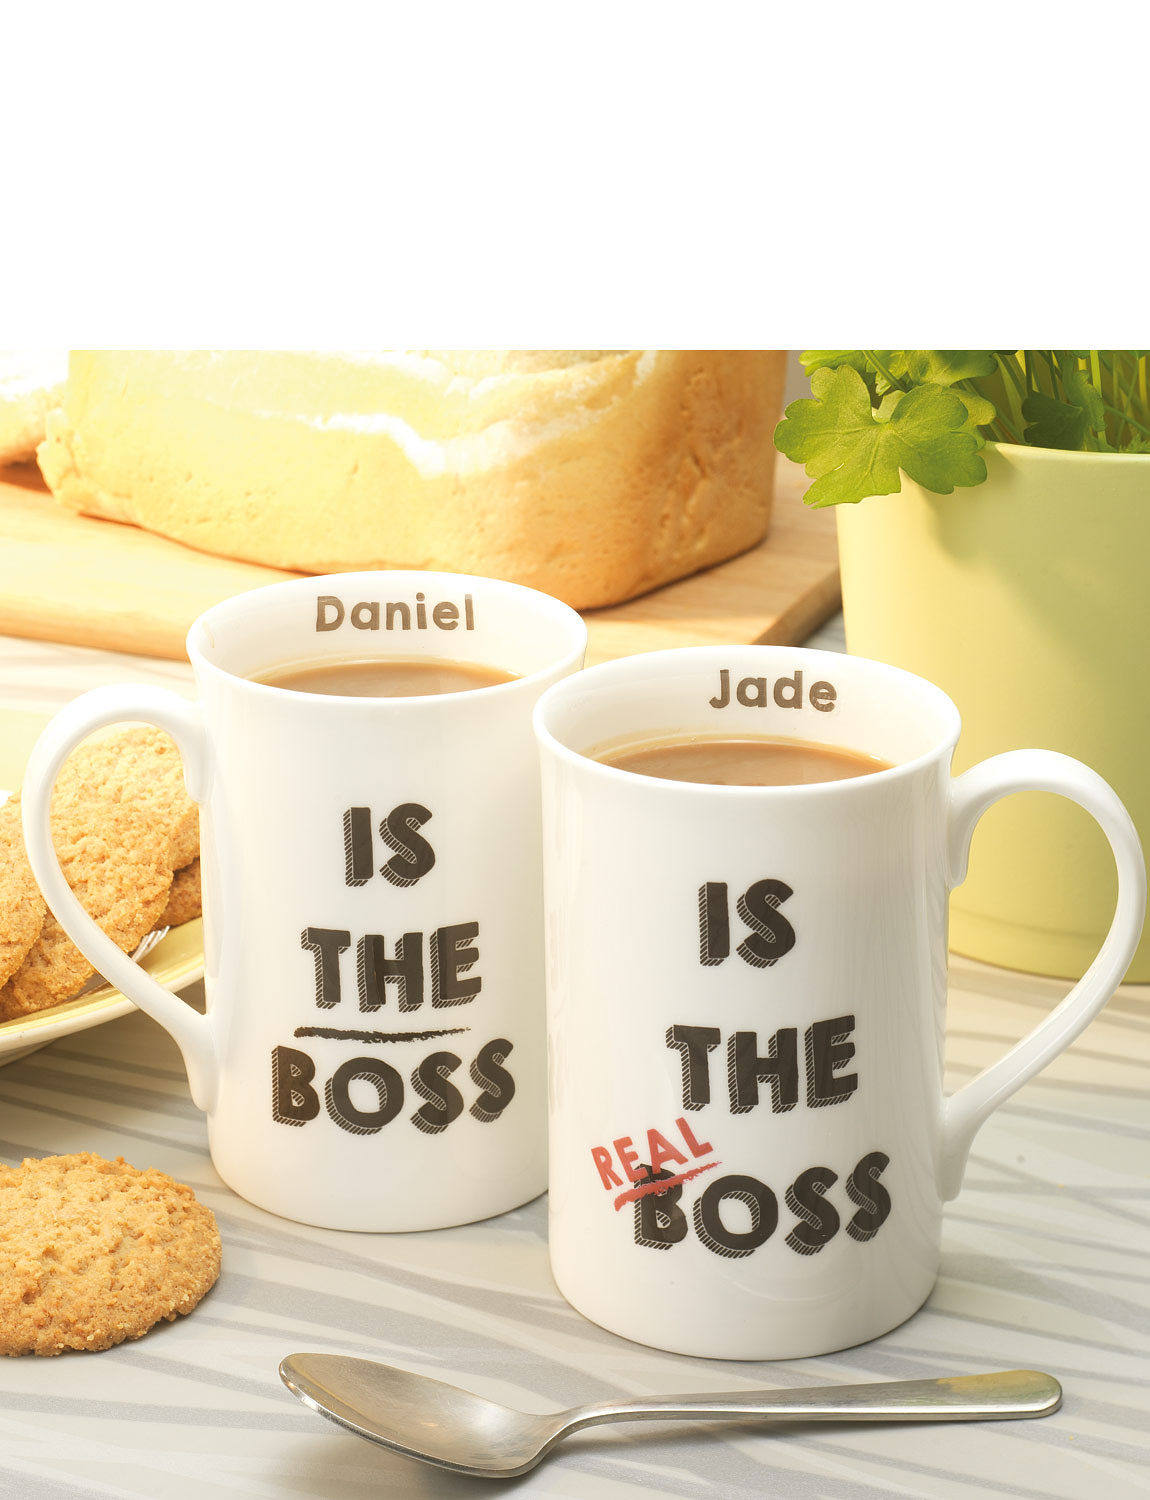 The real boss mug